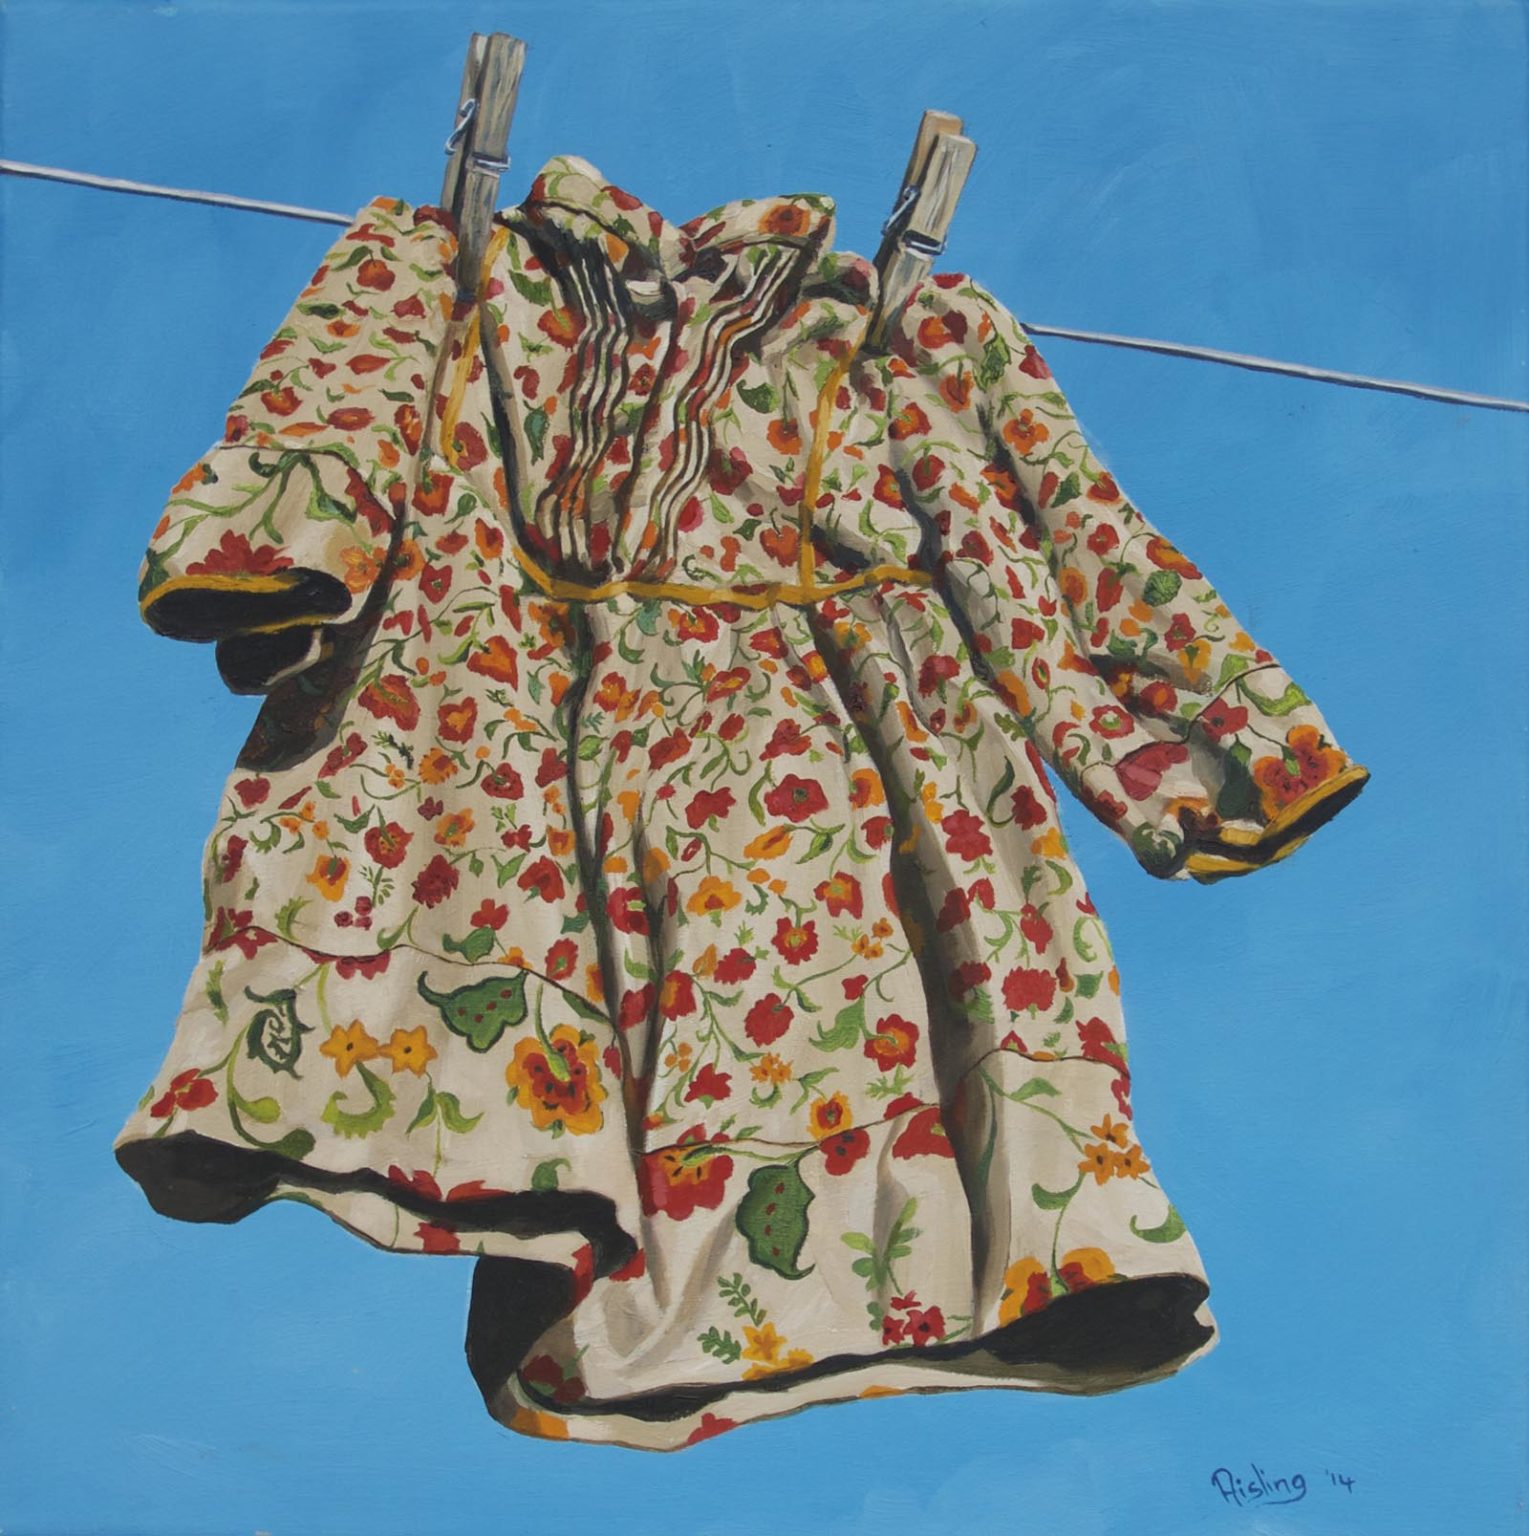 Sinéad’s dress | Oil on canvas, 30cm x 30cm